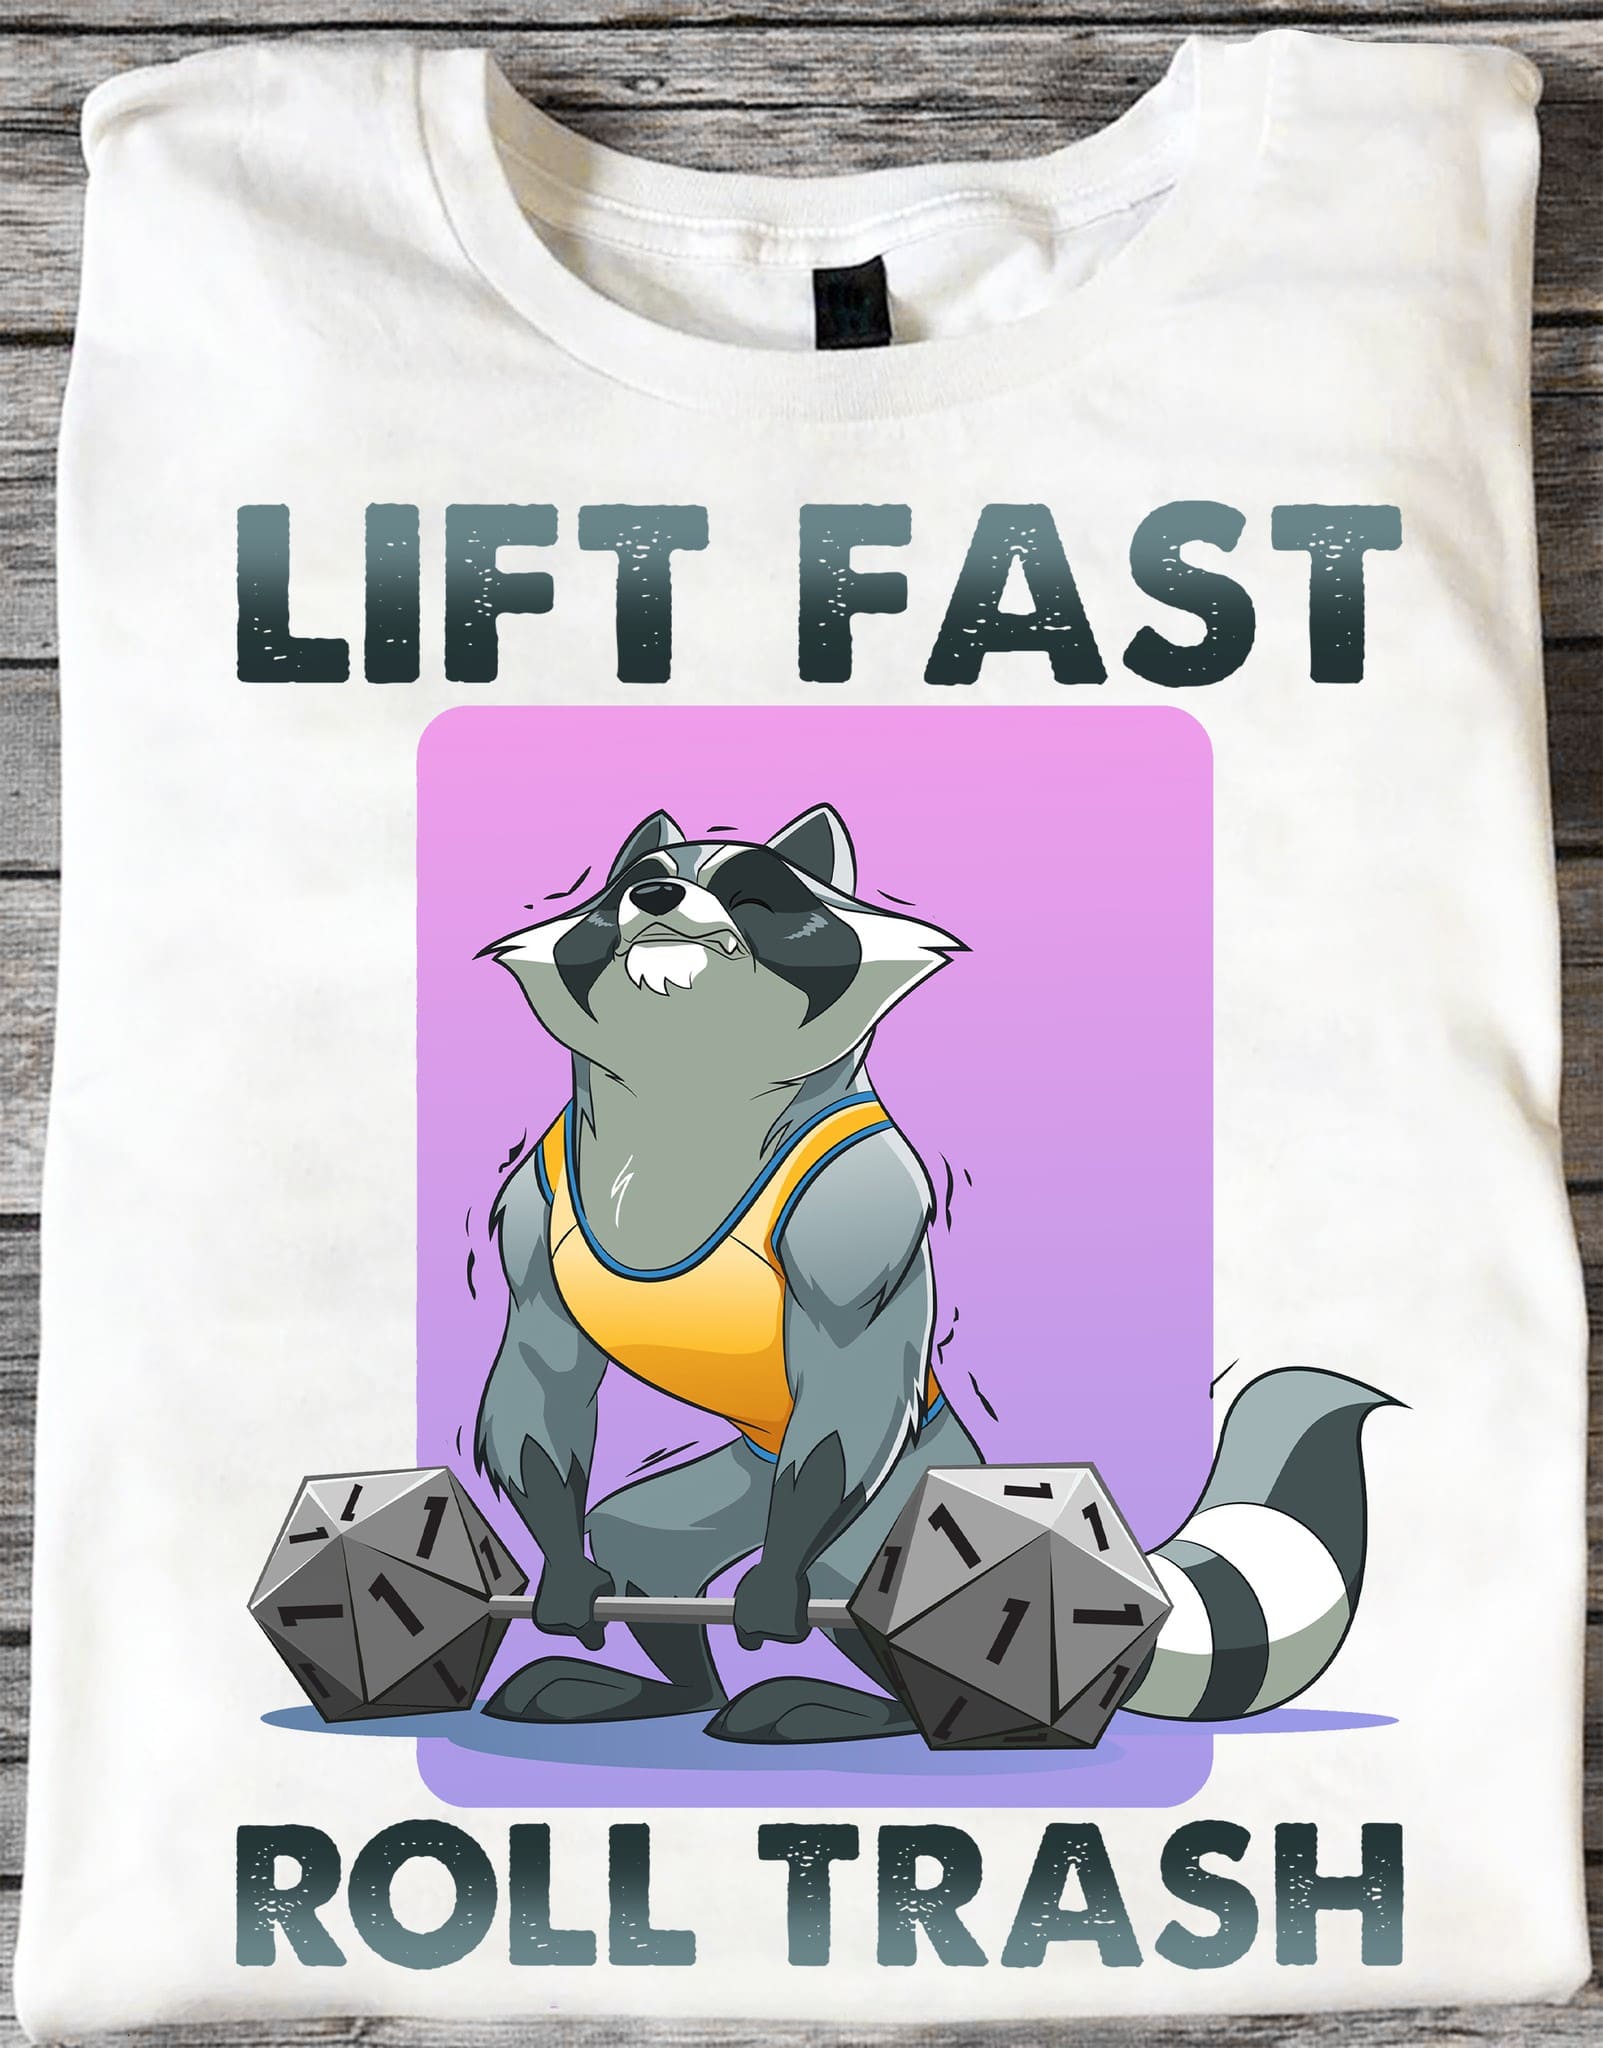 Raccoon Weight Lifting - Lift fast roll trash